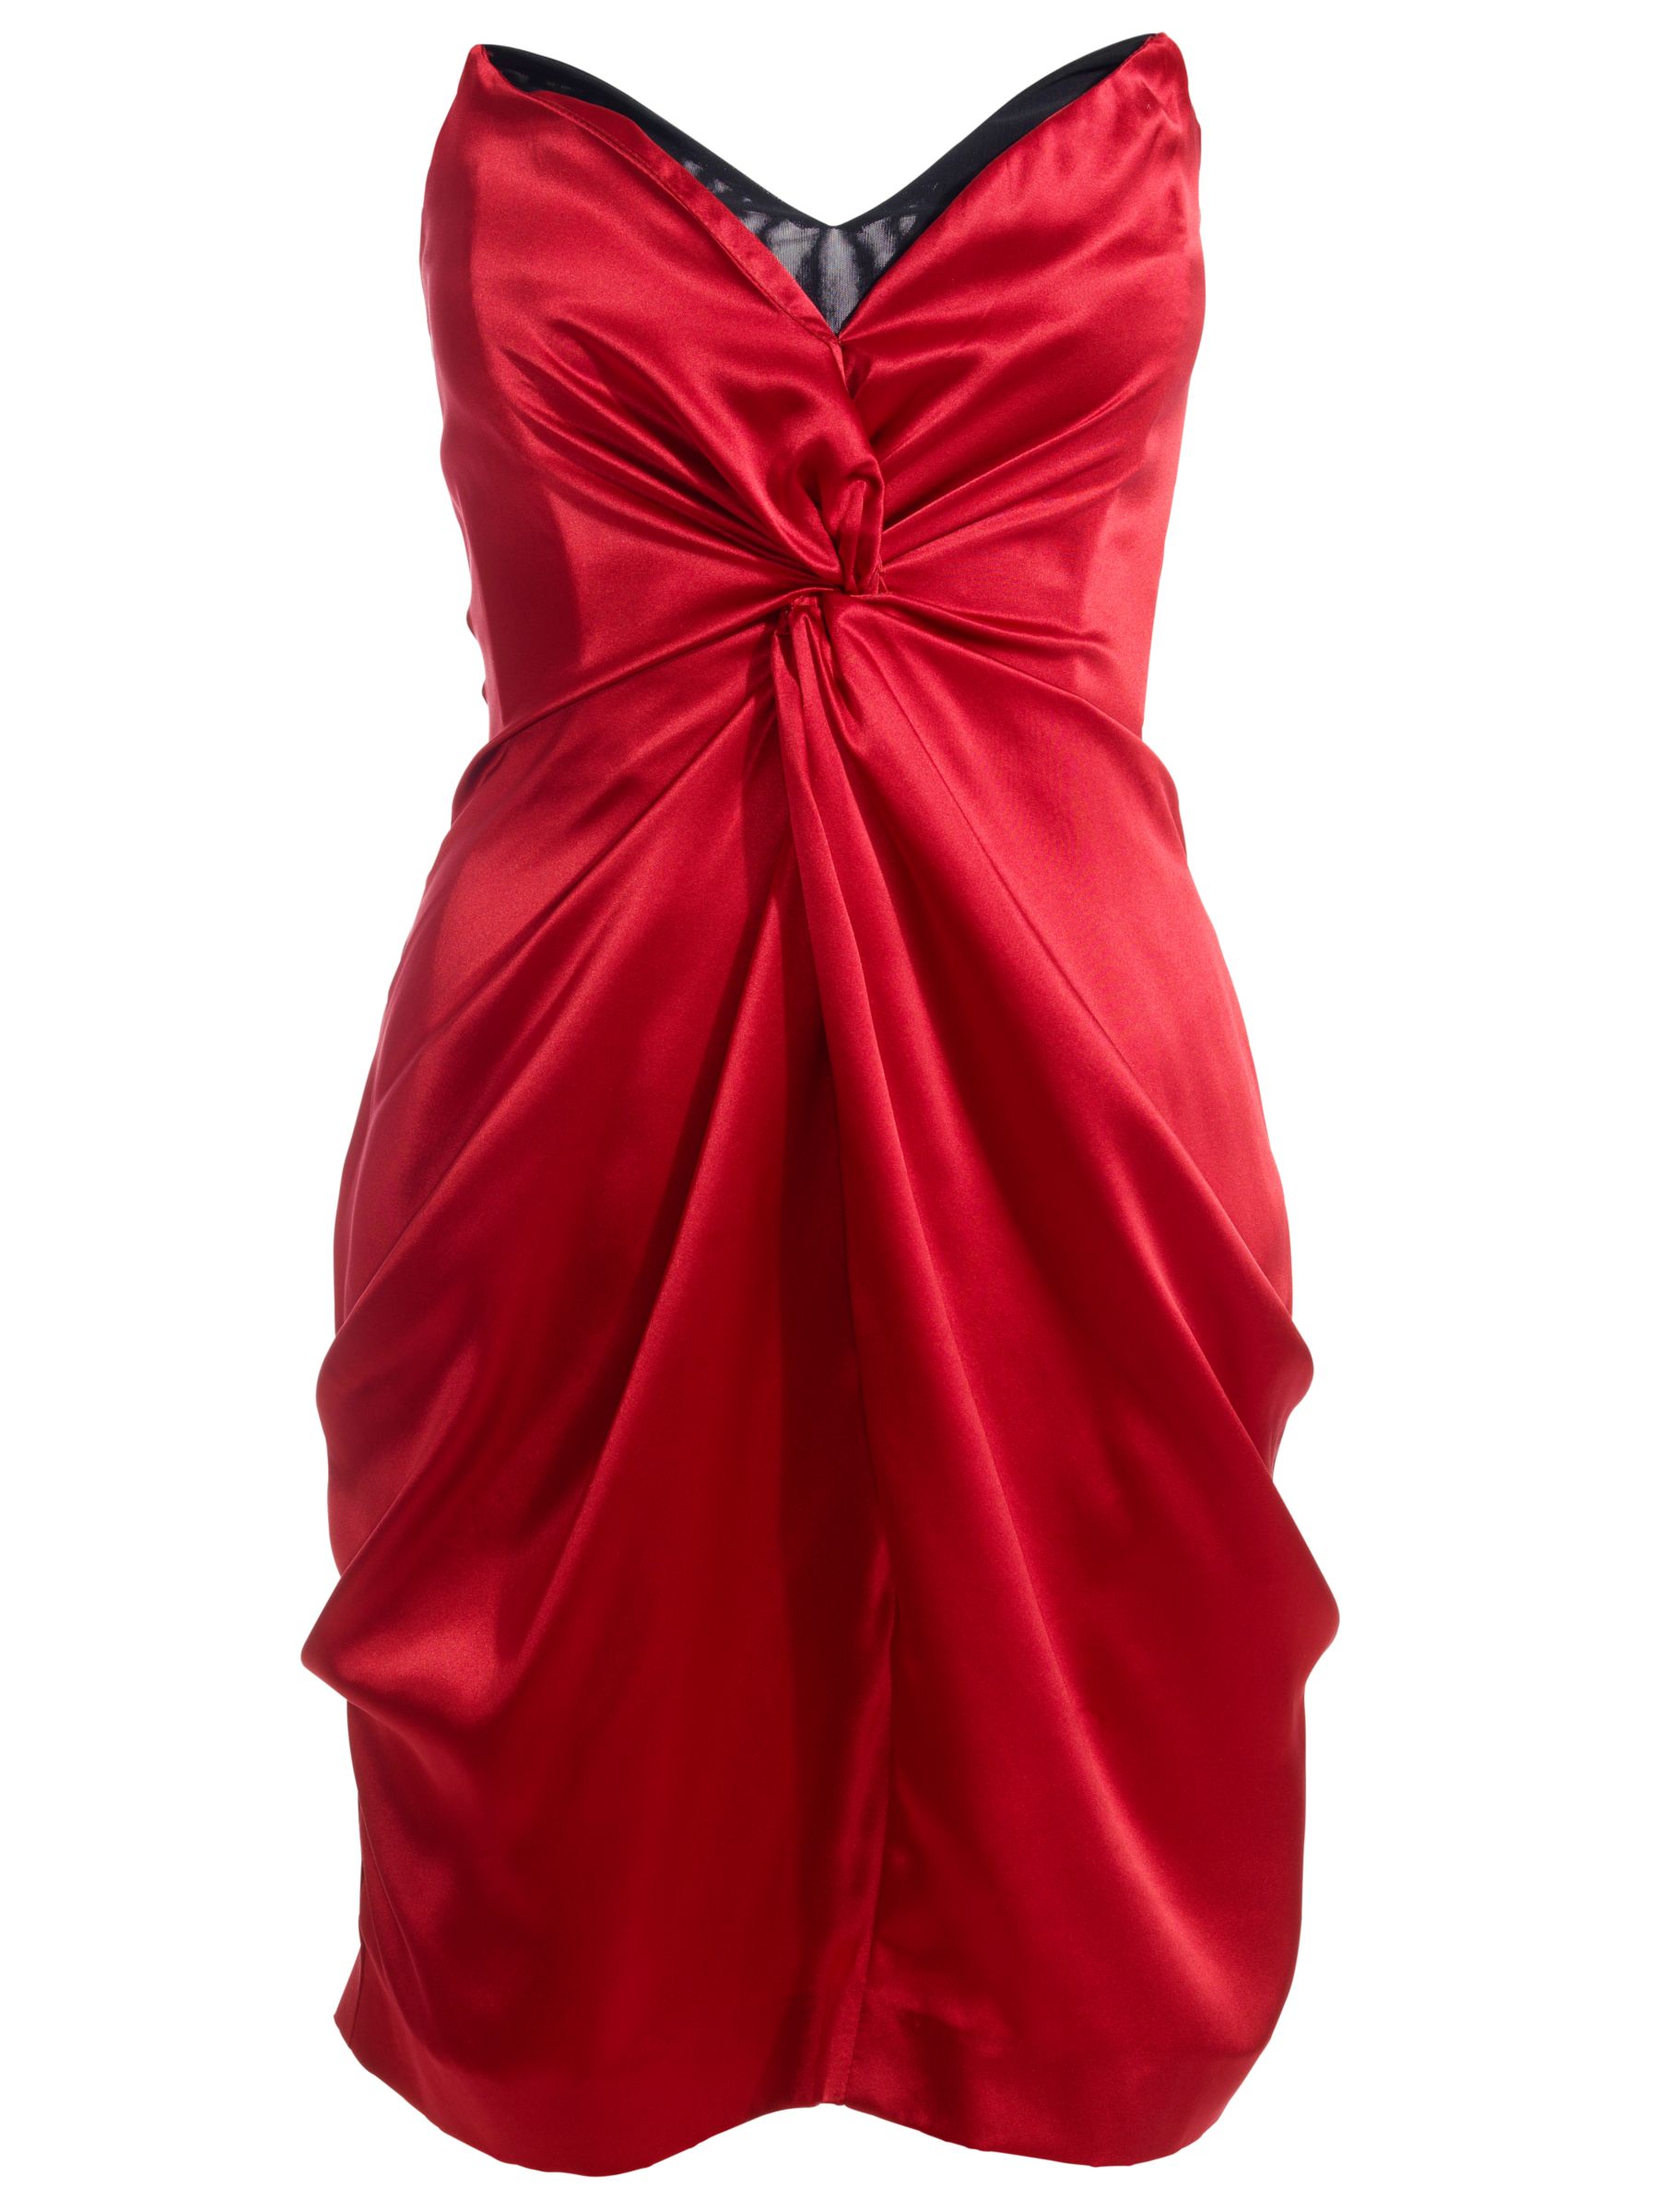 Reiss Courtney Corset Bustier Dress, Red at John Lewis